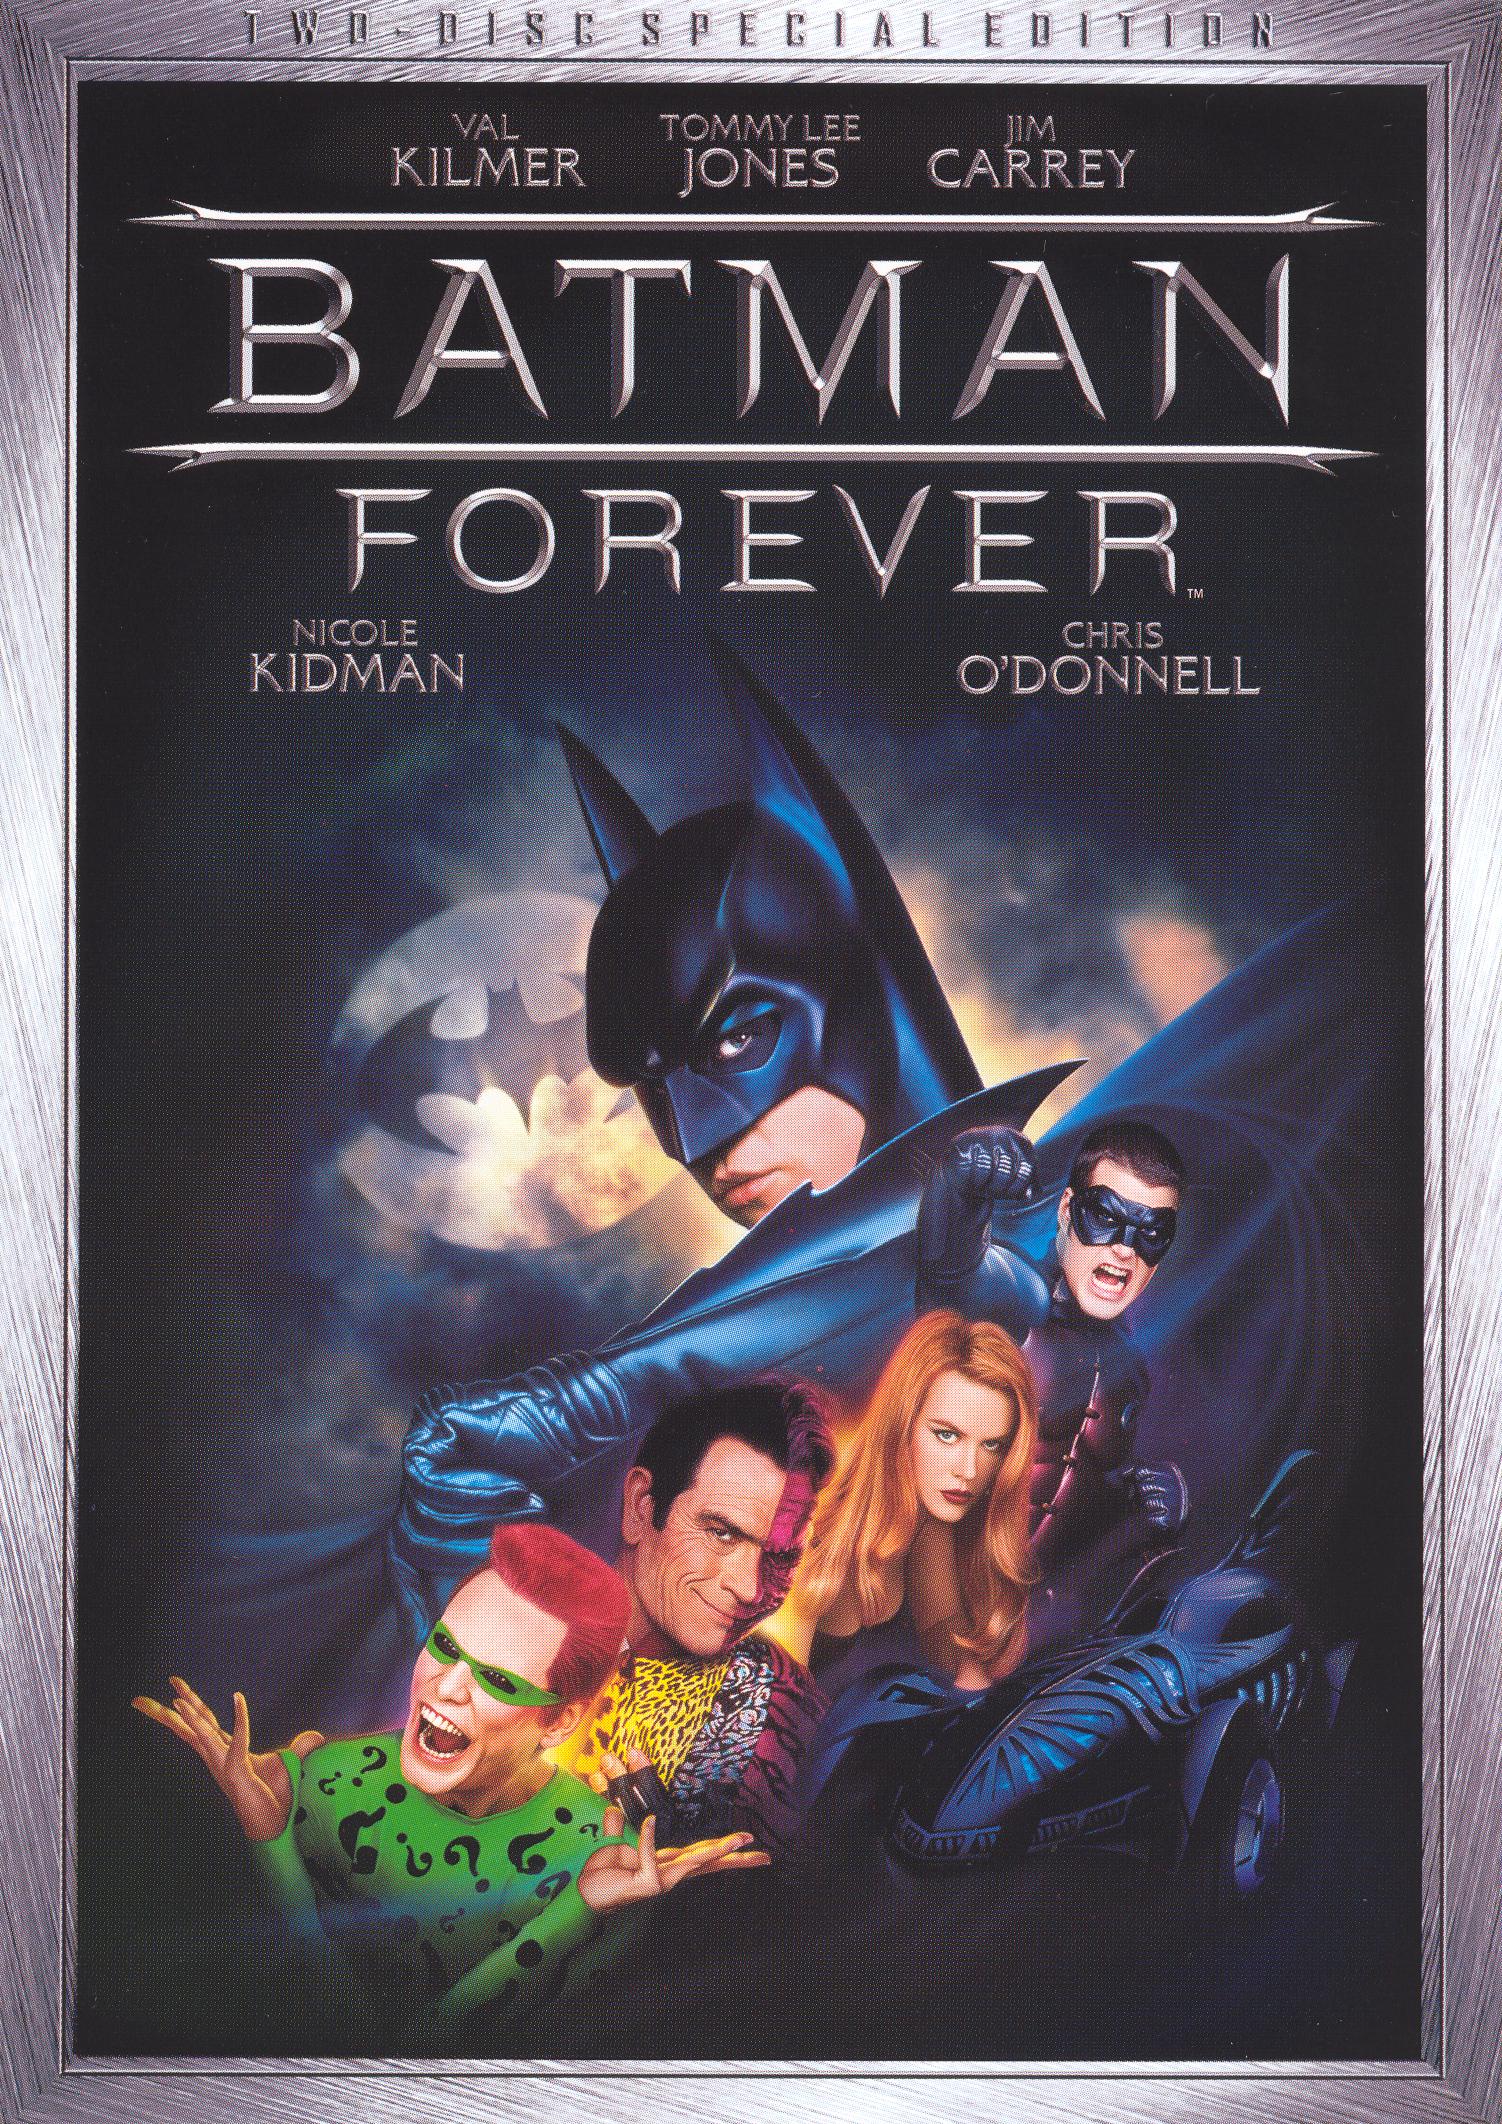 Batman Forever [2 Discs] [DVD] [1995] - Best Buy